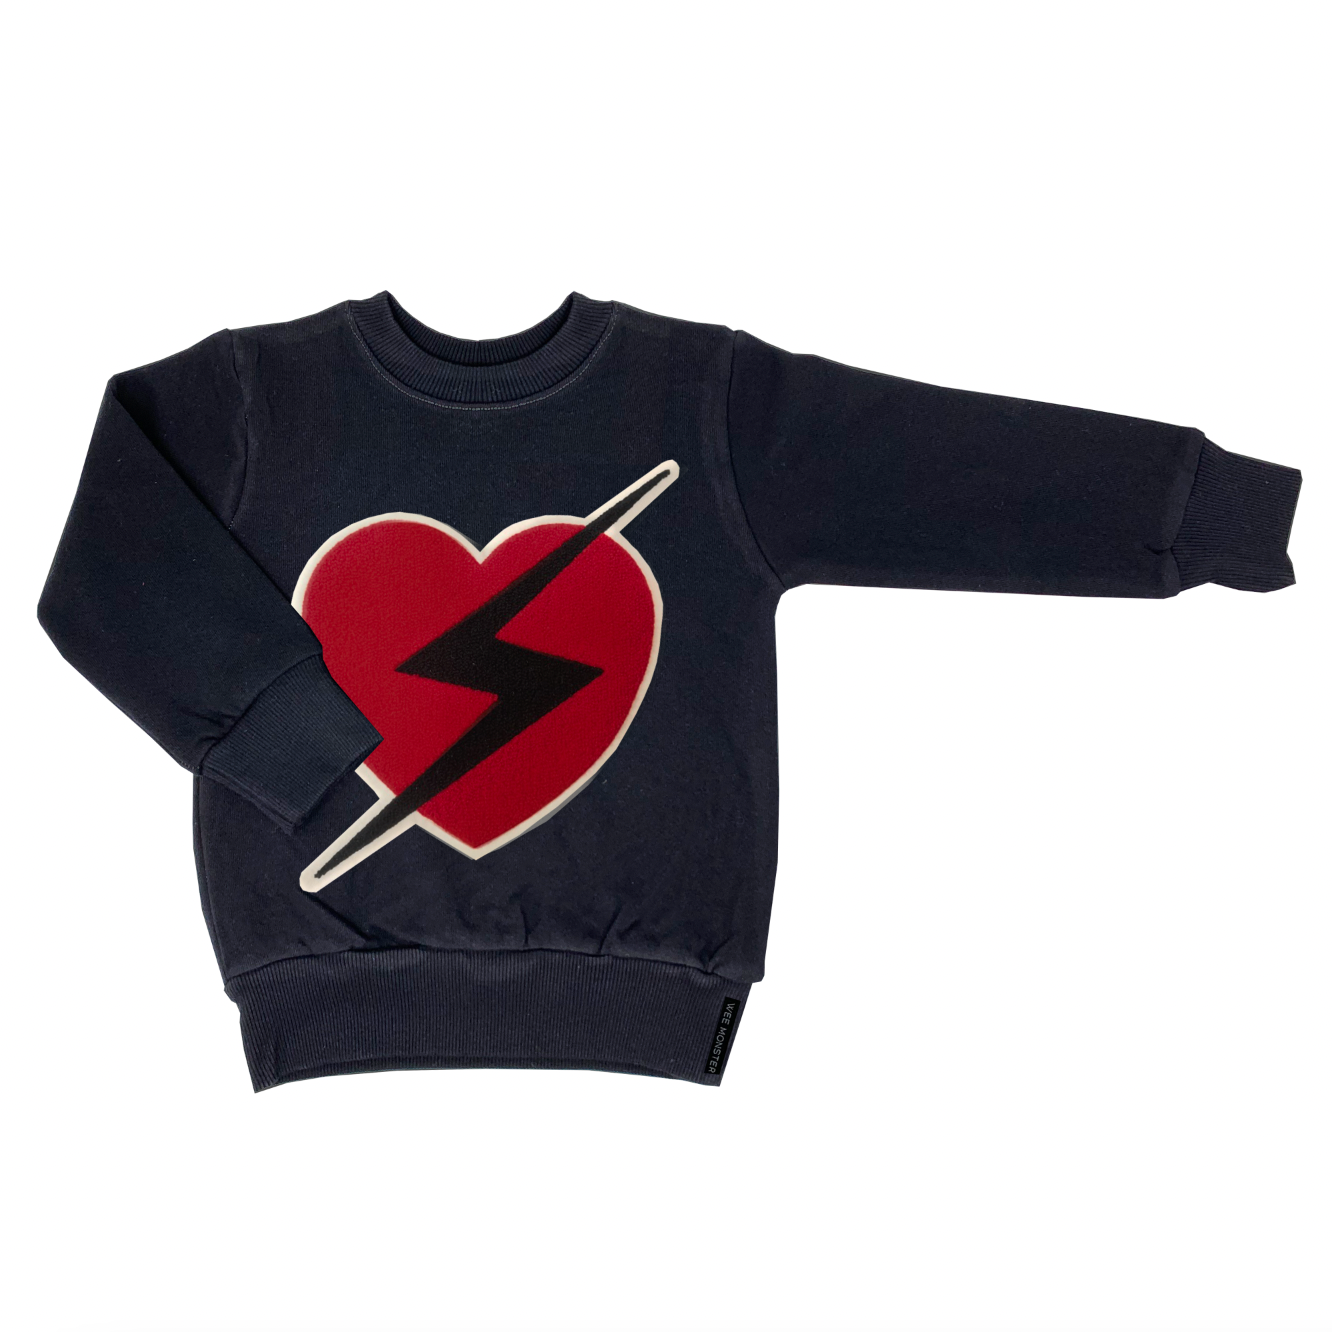 Heart Black Sweatshirt - Unisex for Boys and Girls